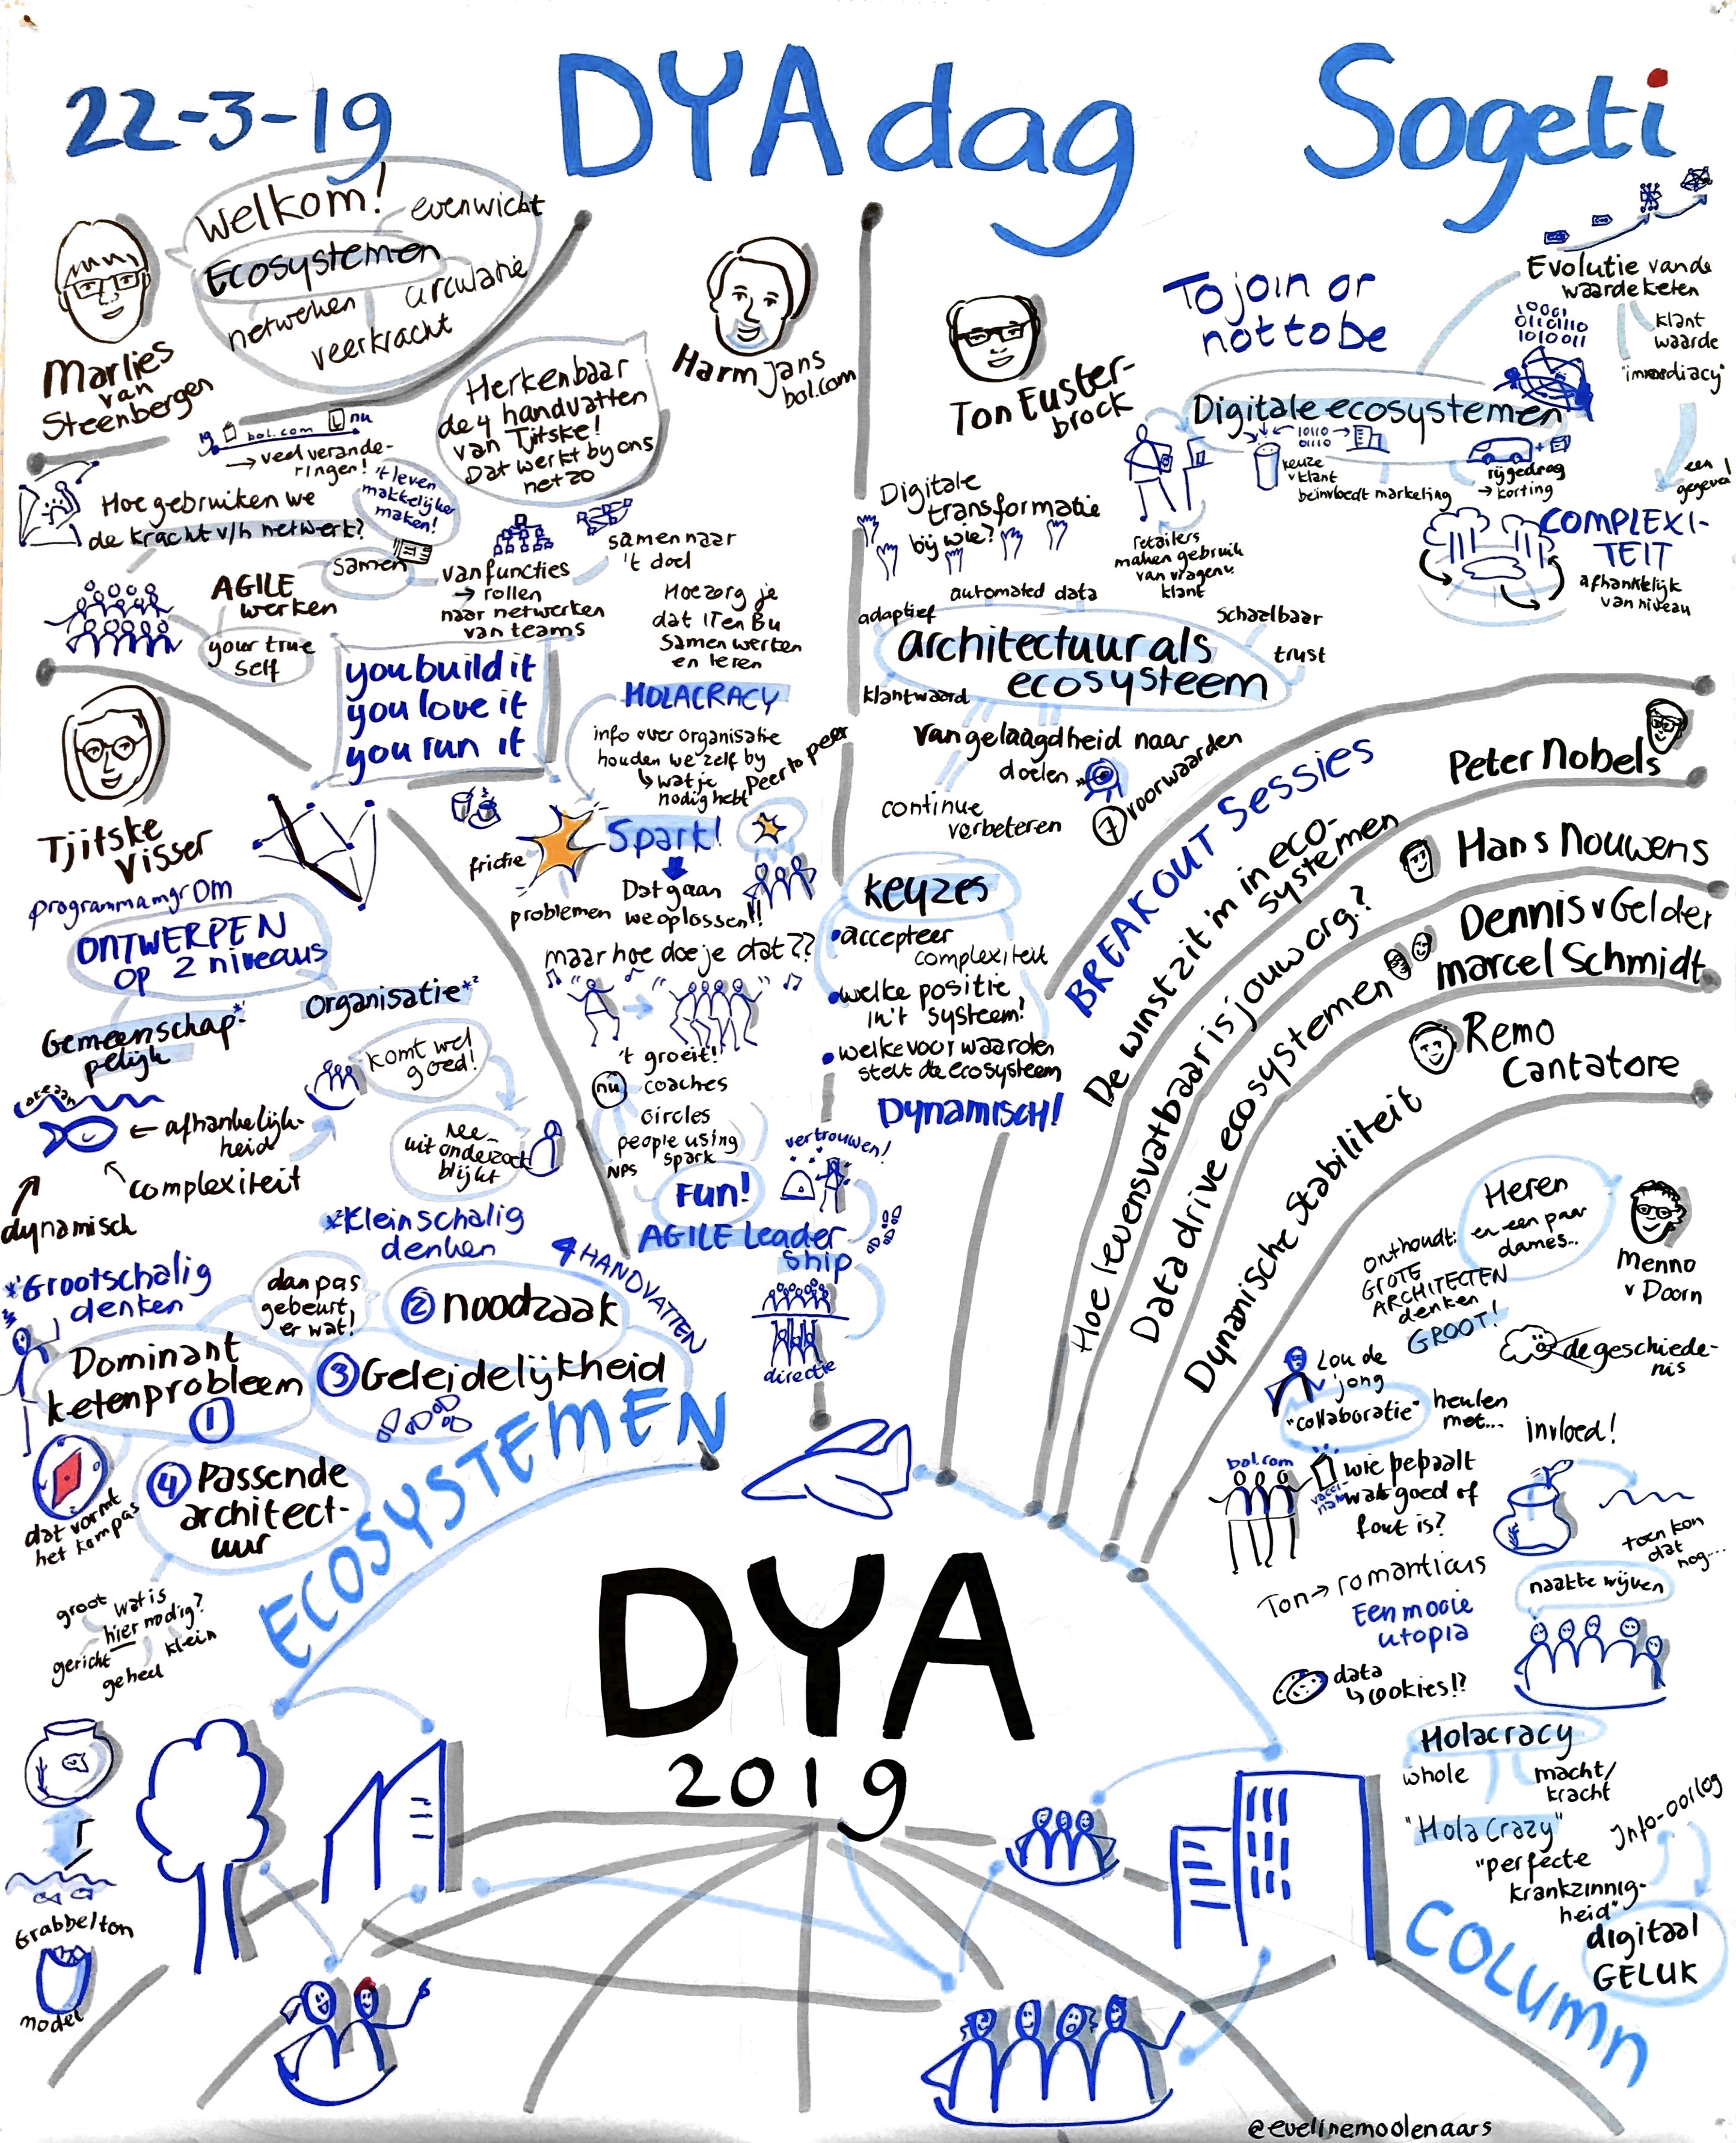 DYA Dag Visual Overview